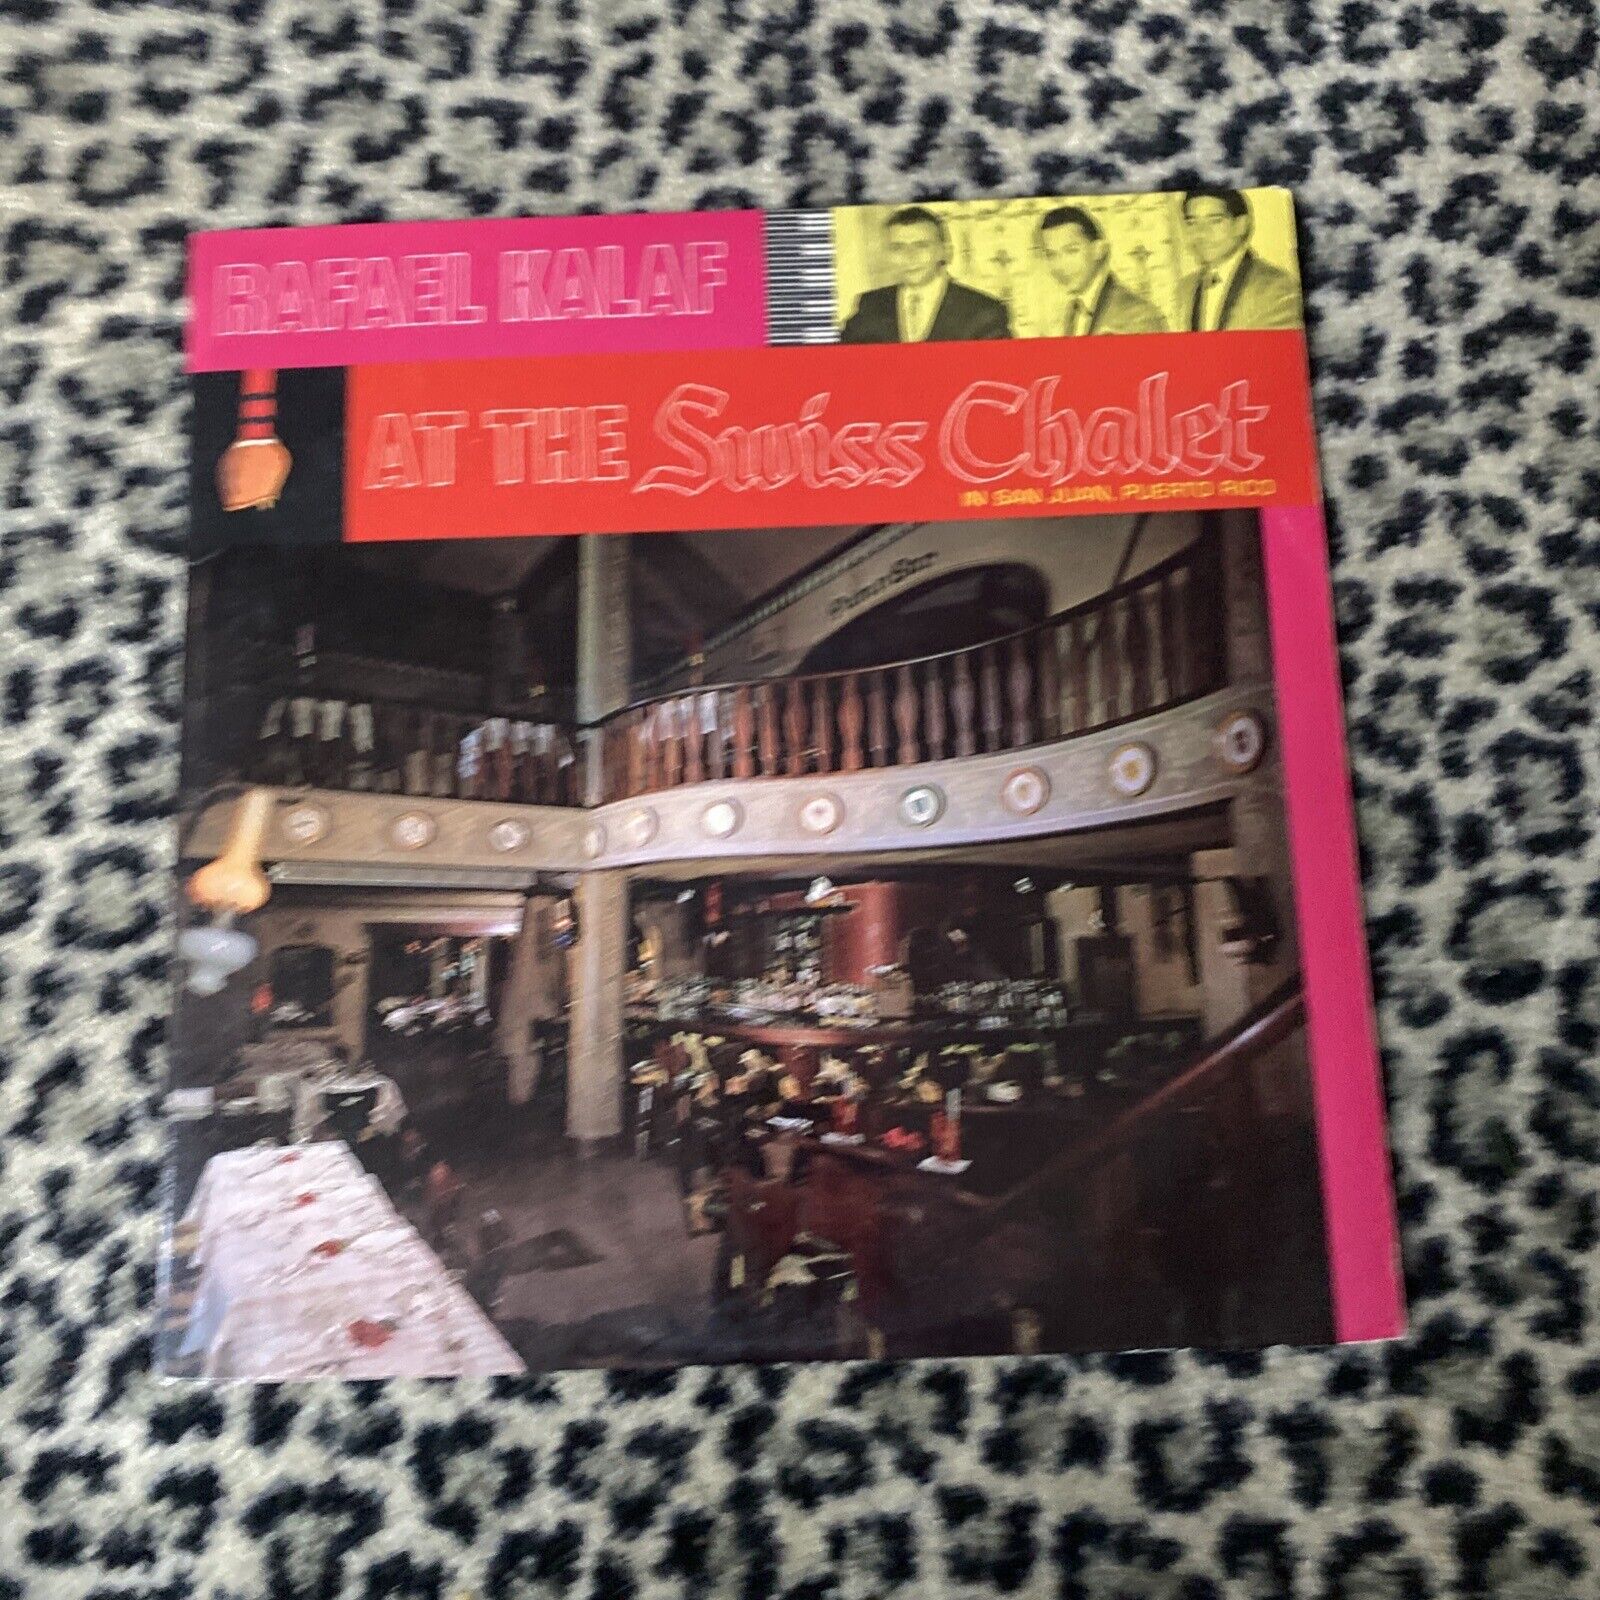 Rare, VinylRafael Kalaf – At The Swiss Chalet In San Juan, Puerto Rico LP Record